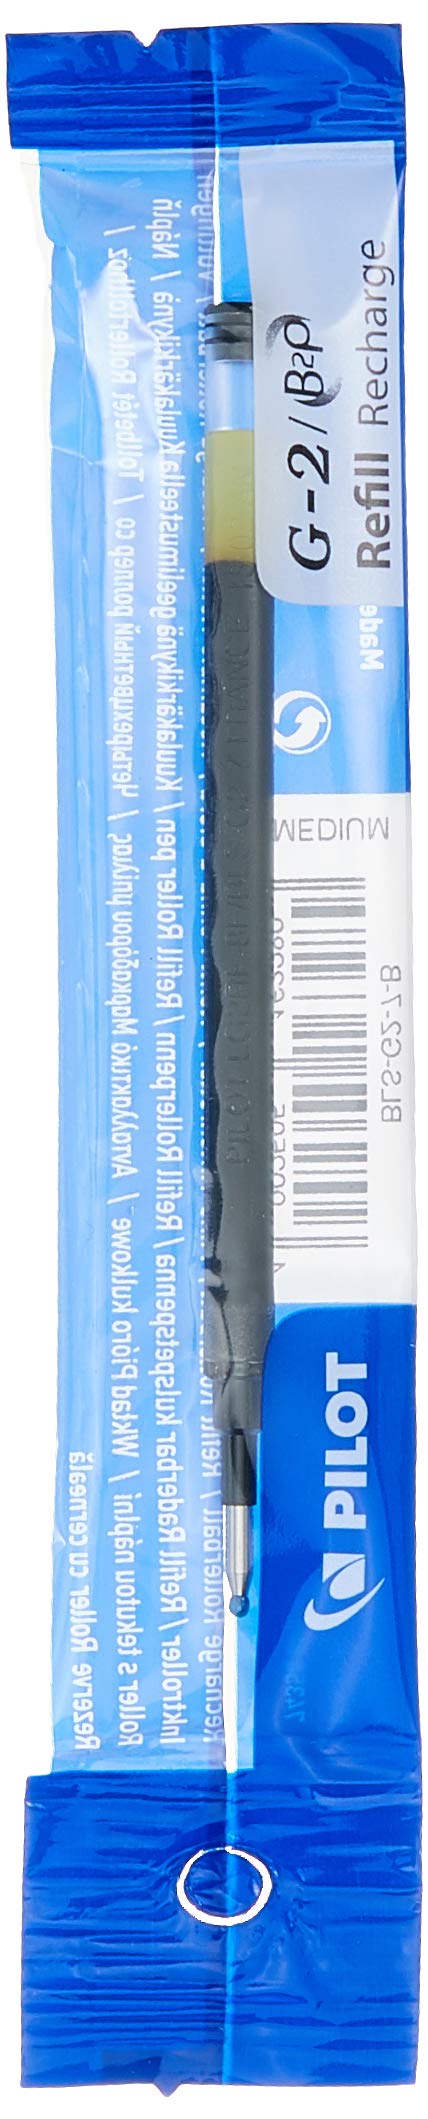 Pilot BLS-G2 Pen Refills 0.4 mm Black Pack of 12